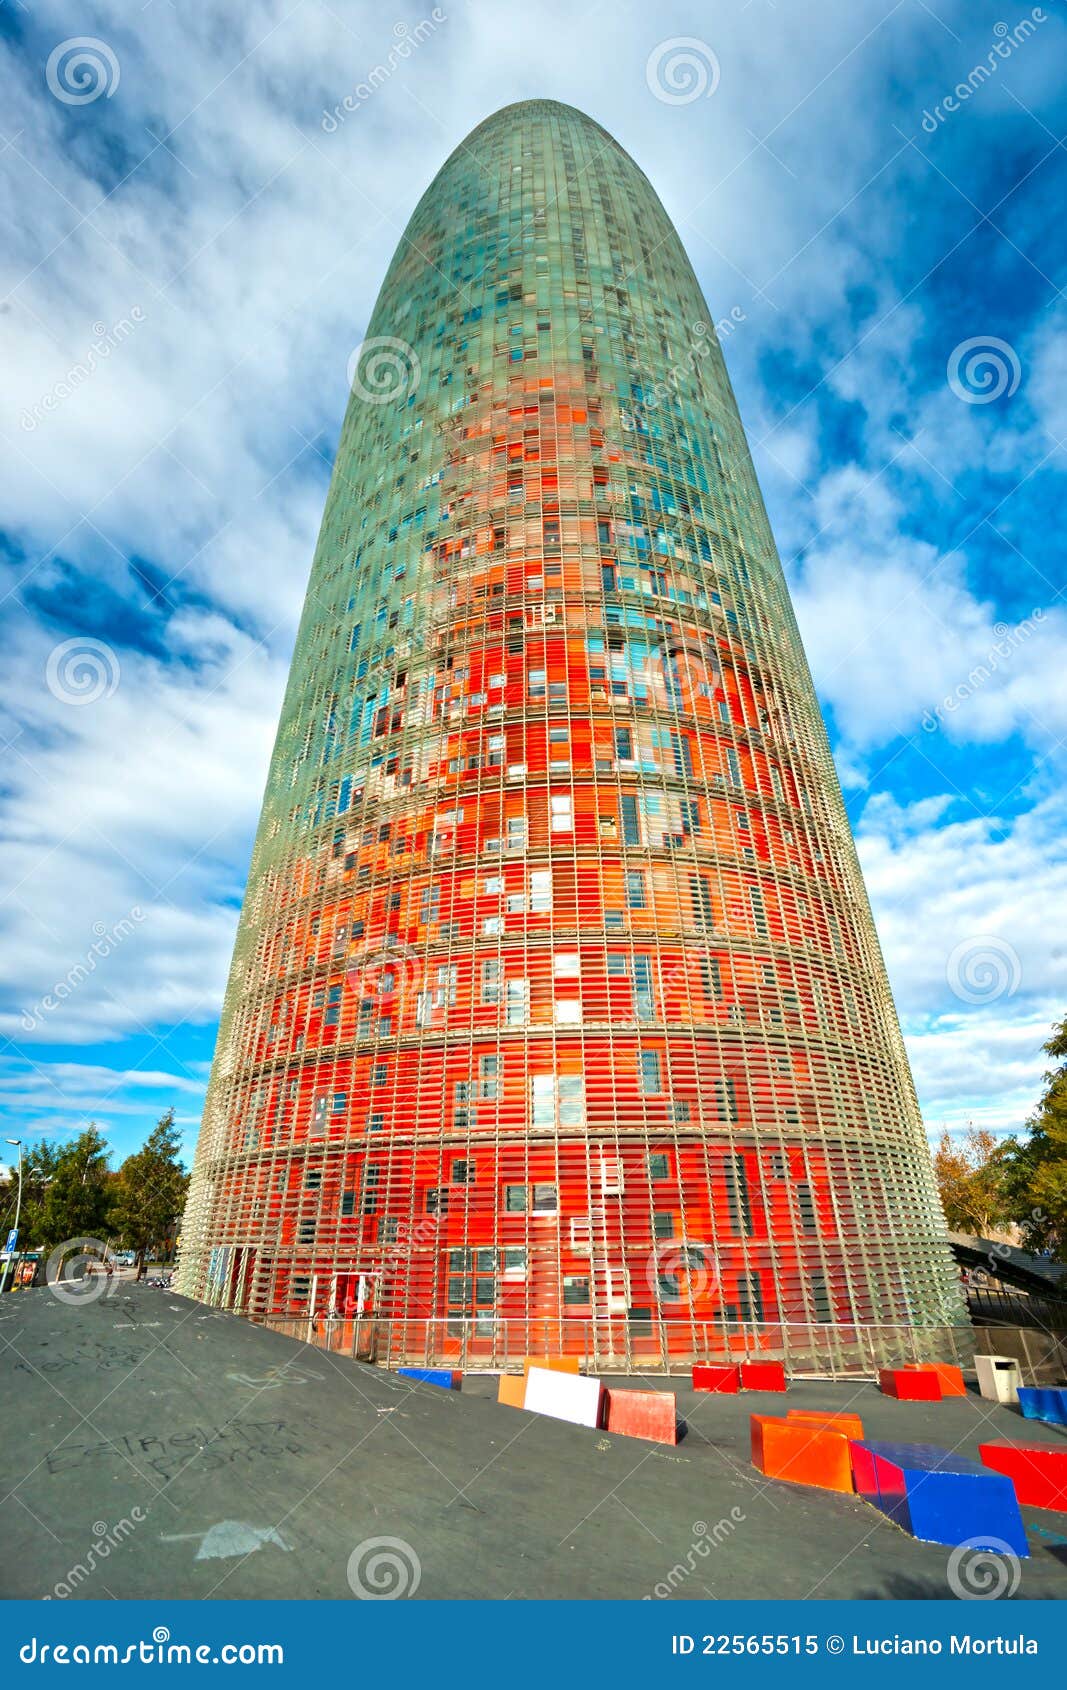 Baan Alarmerend geef de bloem water The Agbar Tower, Barcelona, Spain. Stock Image - Image of lonely, gaudi:  22565515